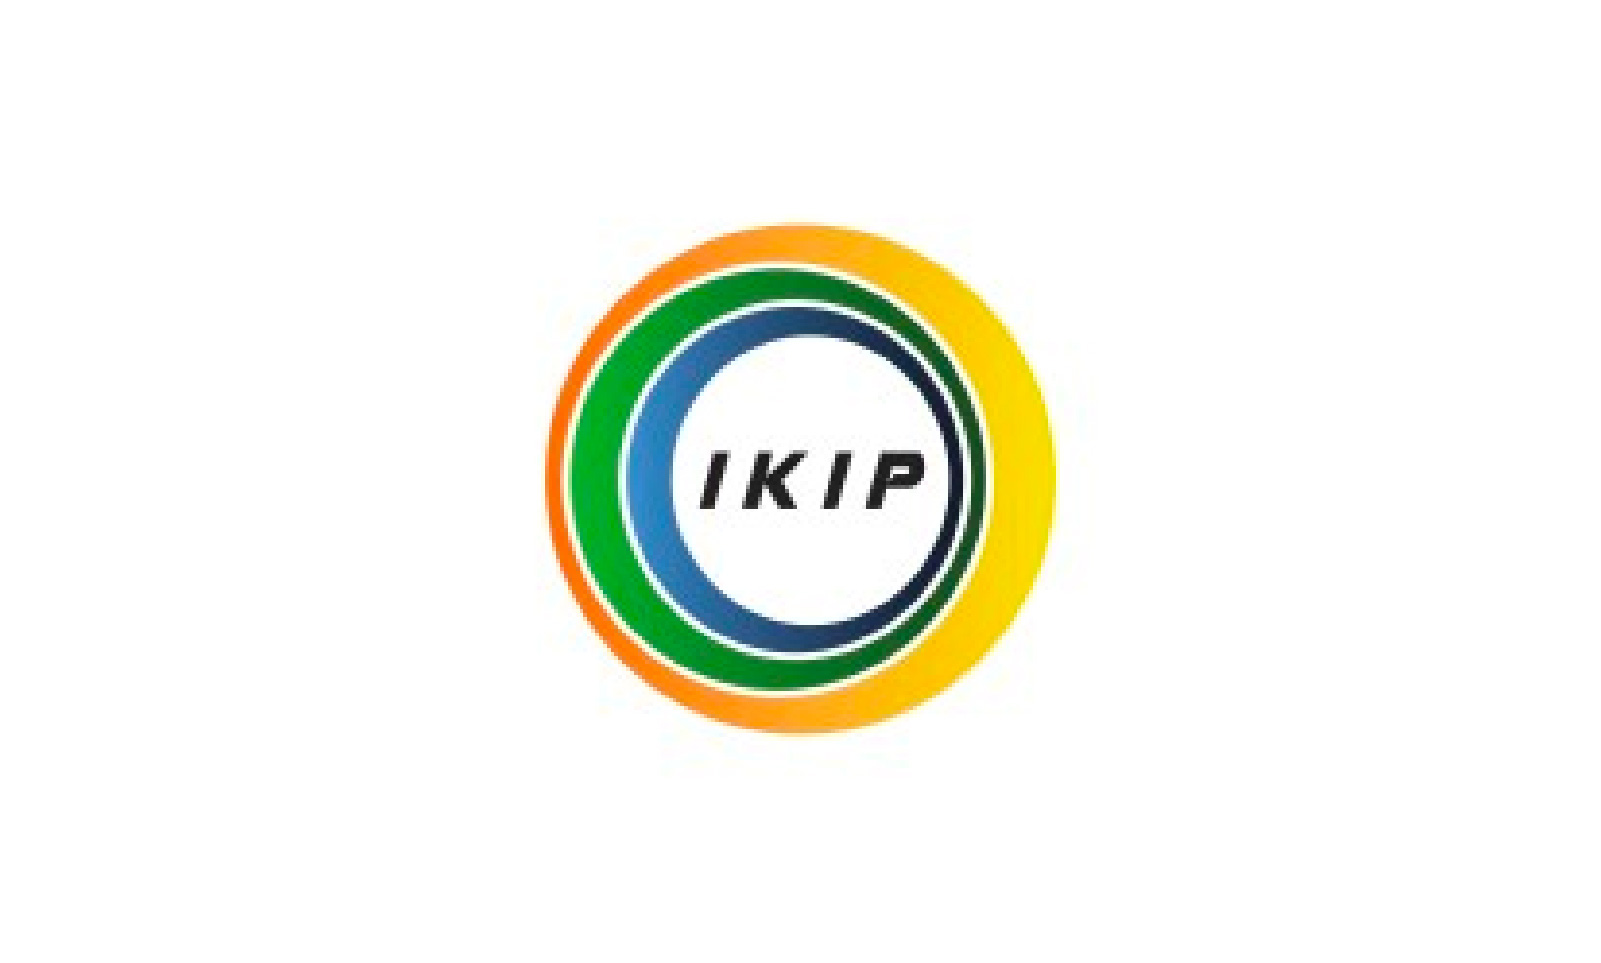 PT Indonesia Konawe Industrial Park PT IKIP 02